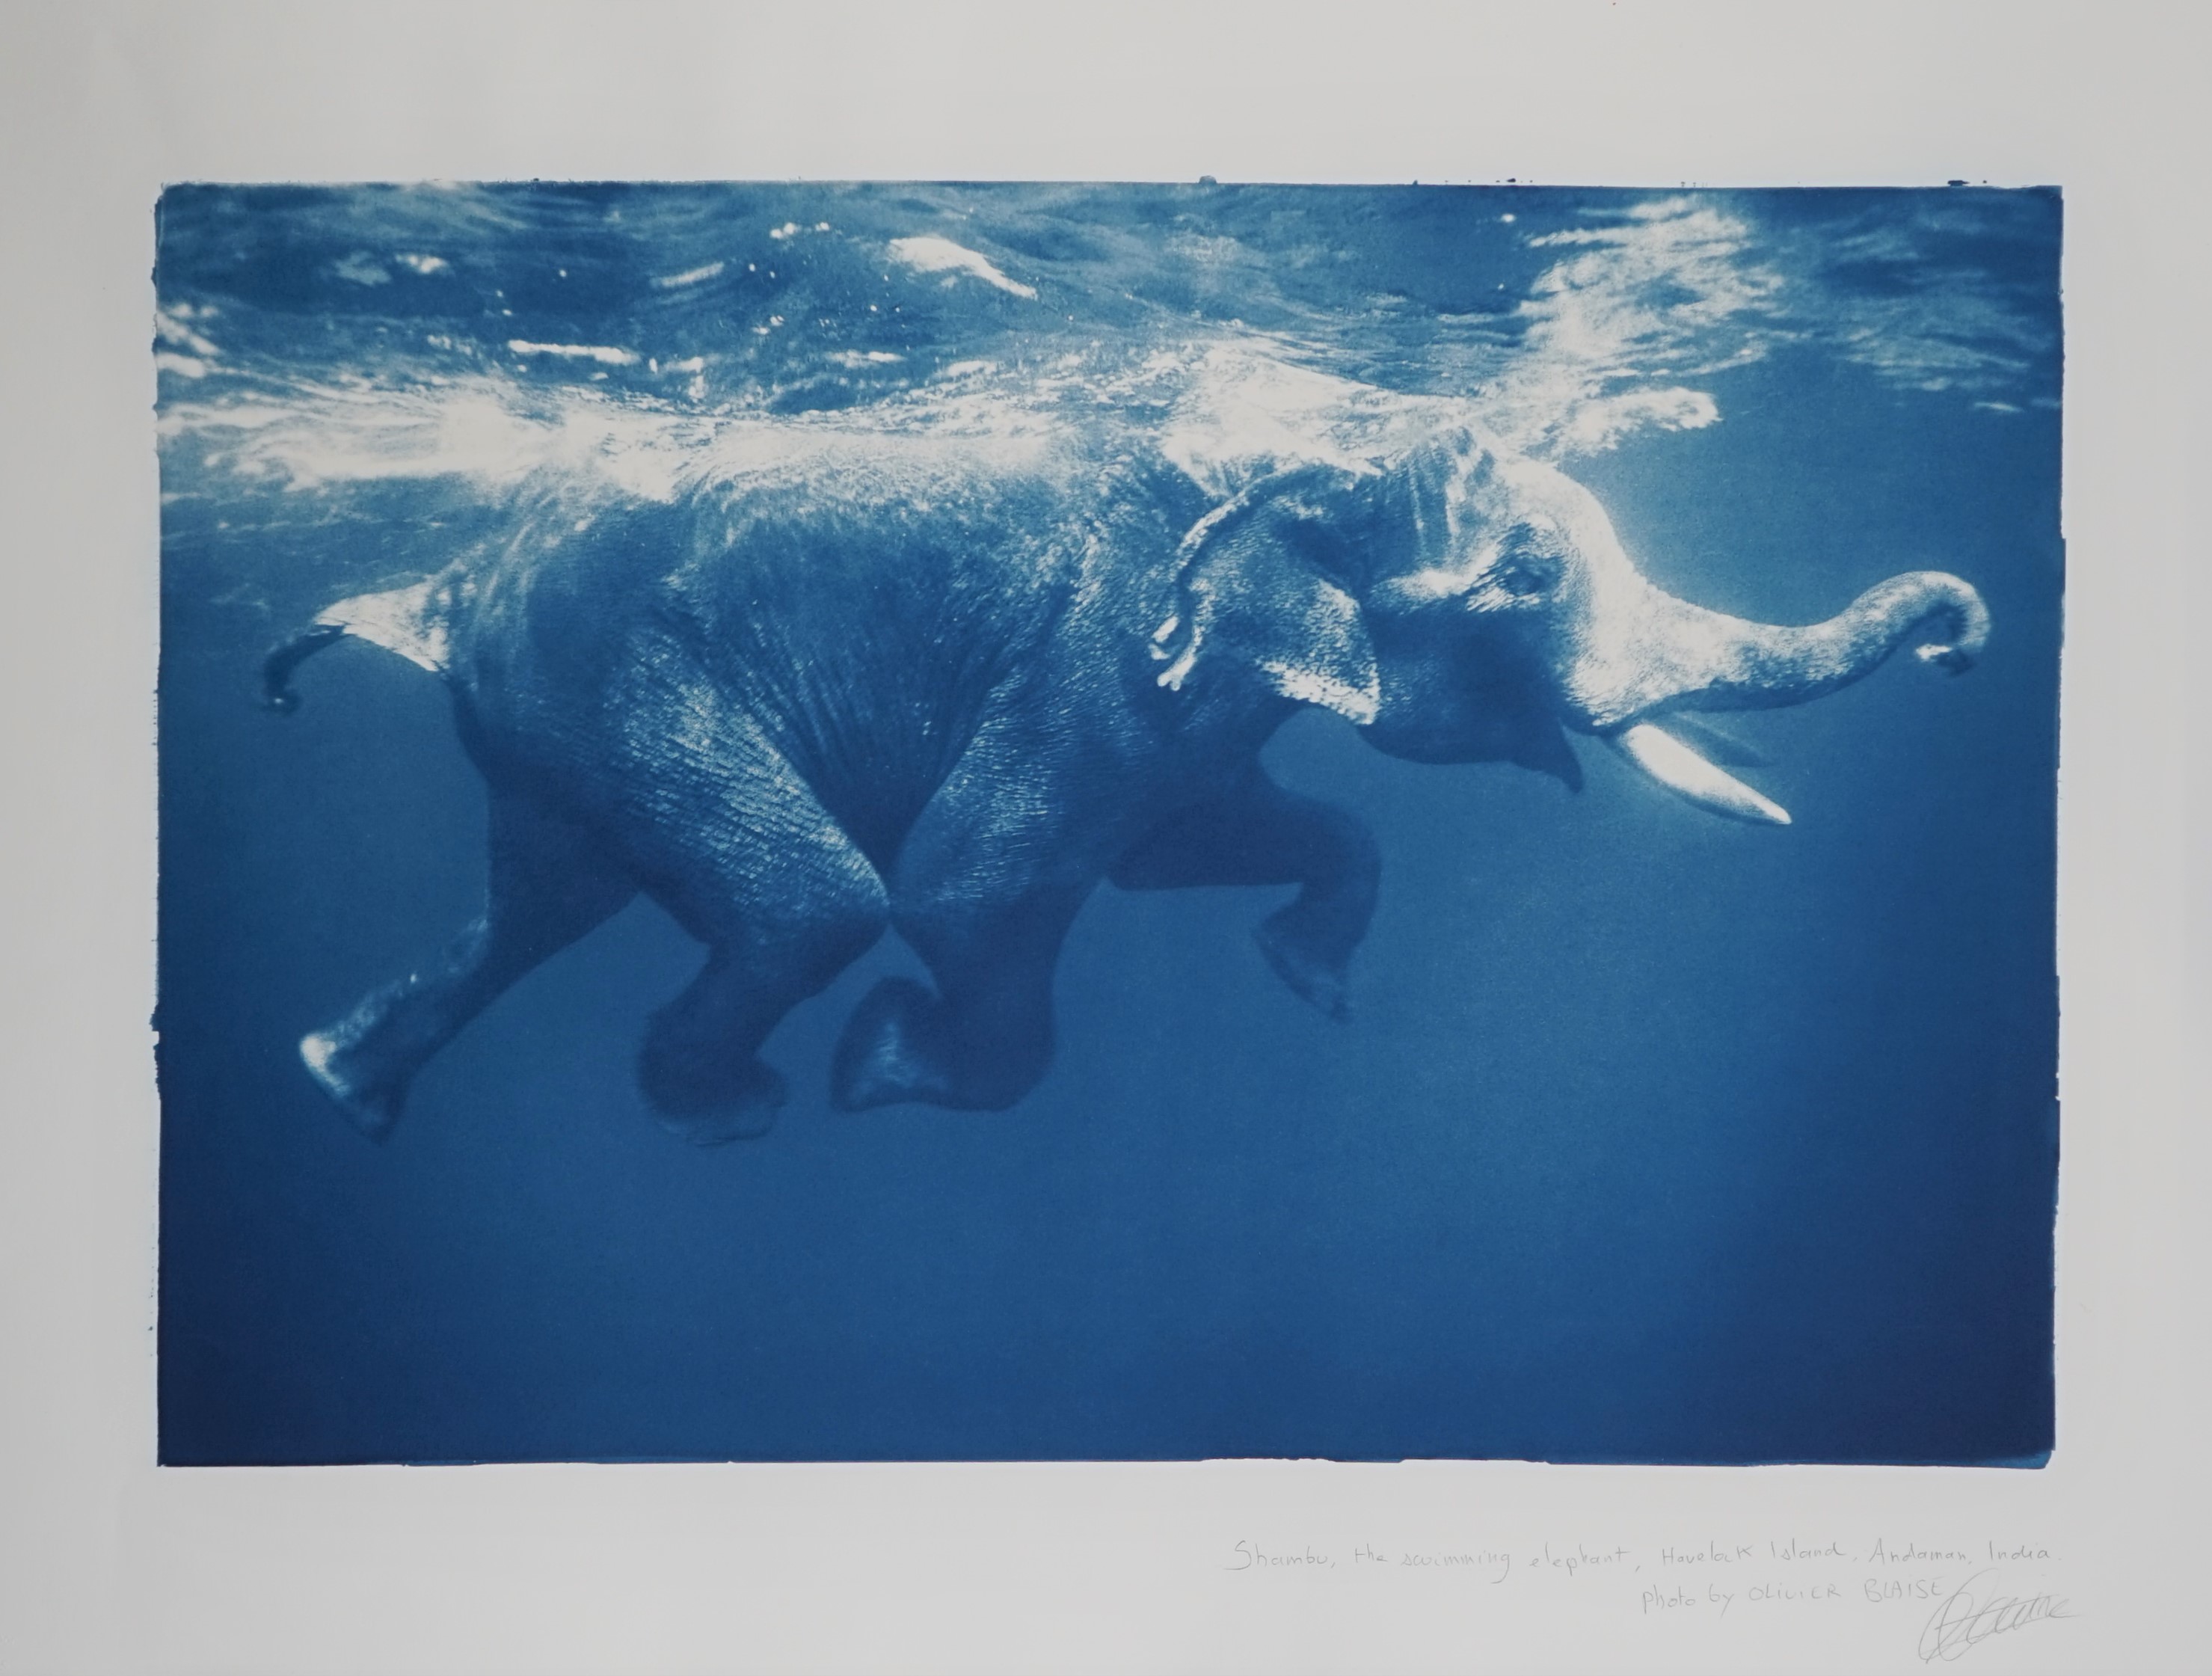 OLIVIER BLAISE  (Contemporary)  Shambou, the swimming elephant, Havelock Island, Andoman, India, 2012.  cyanotype  print, limitation 1 of 2, signed an